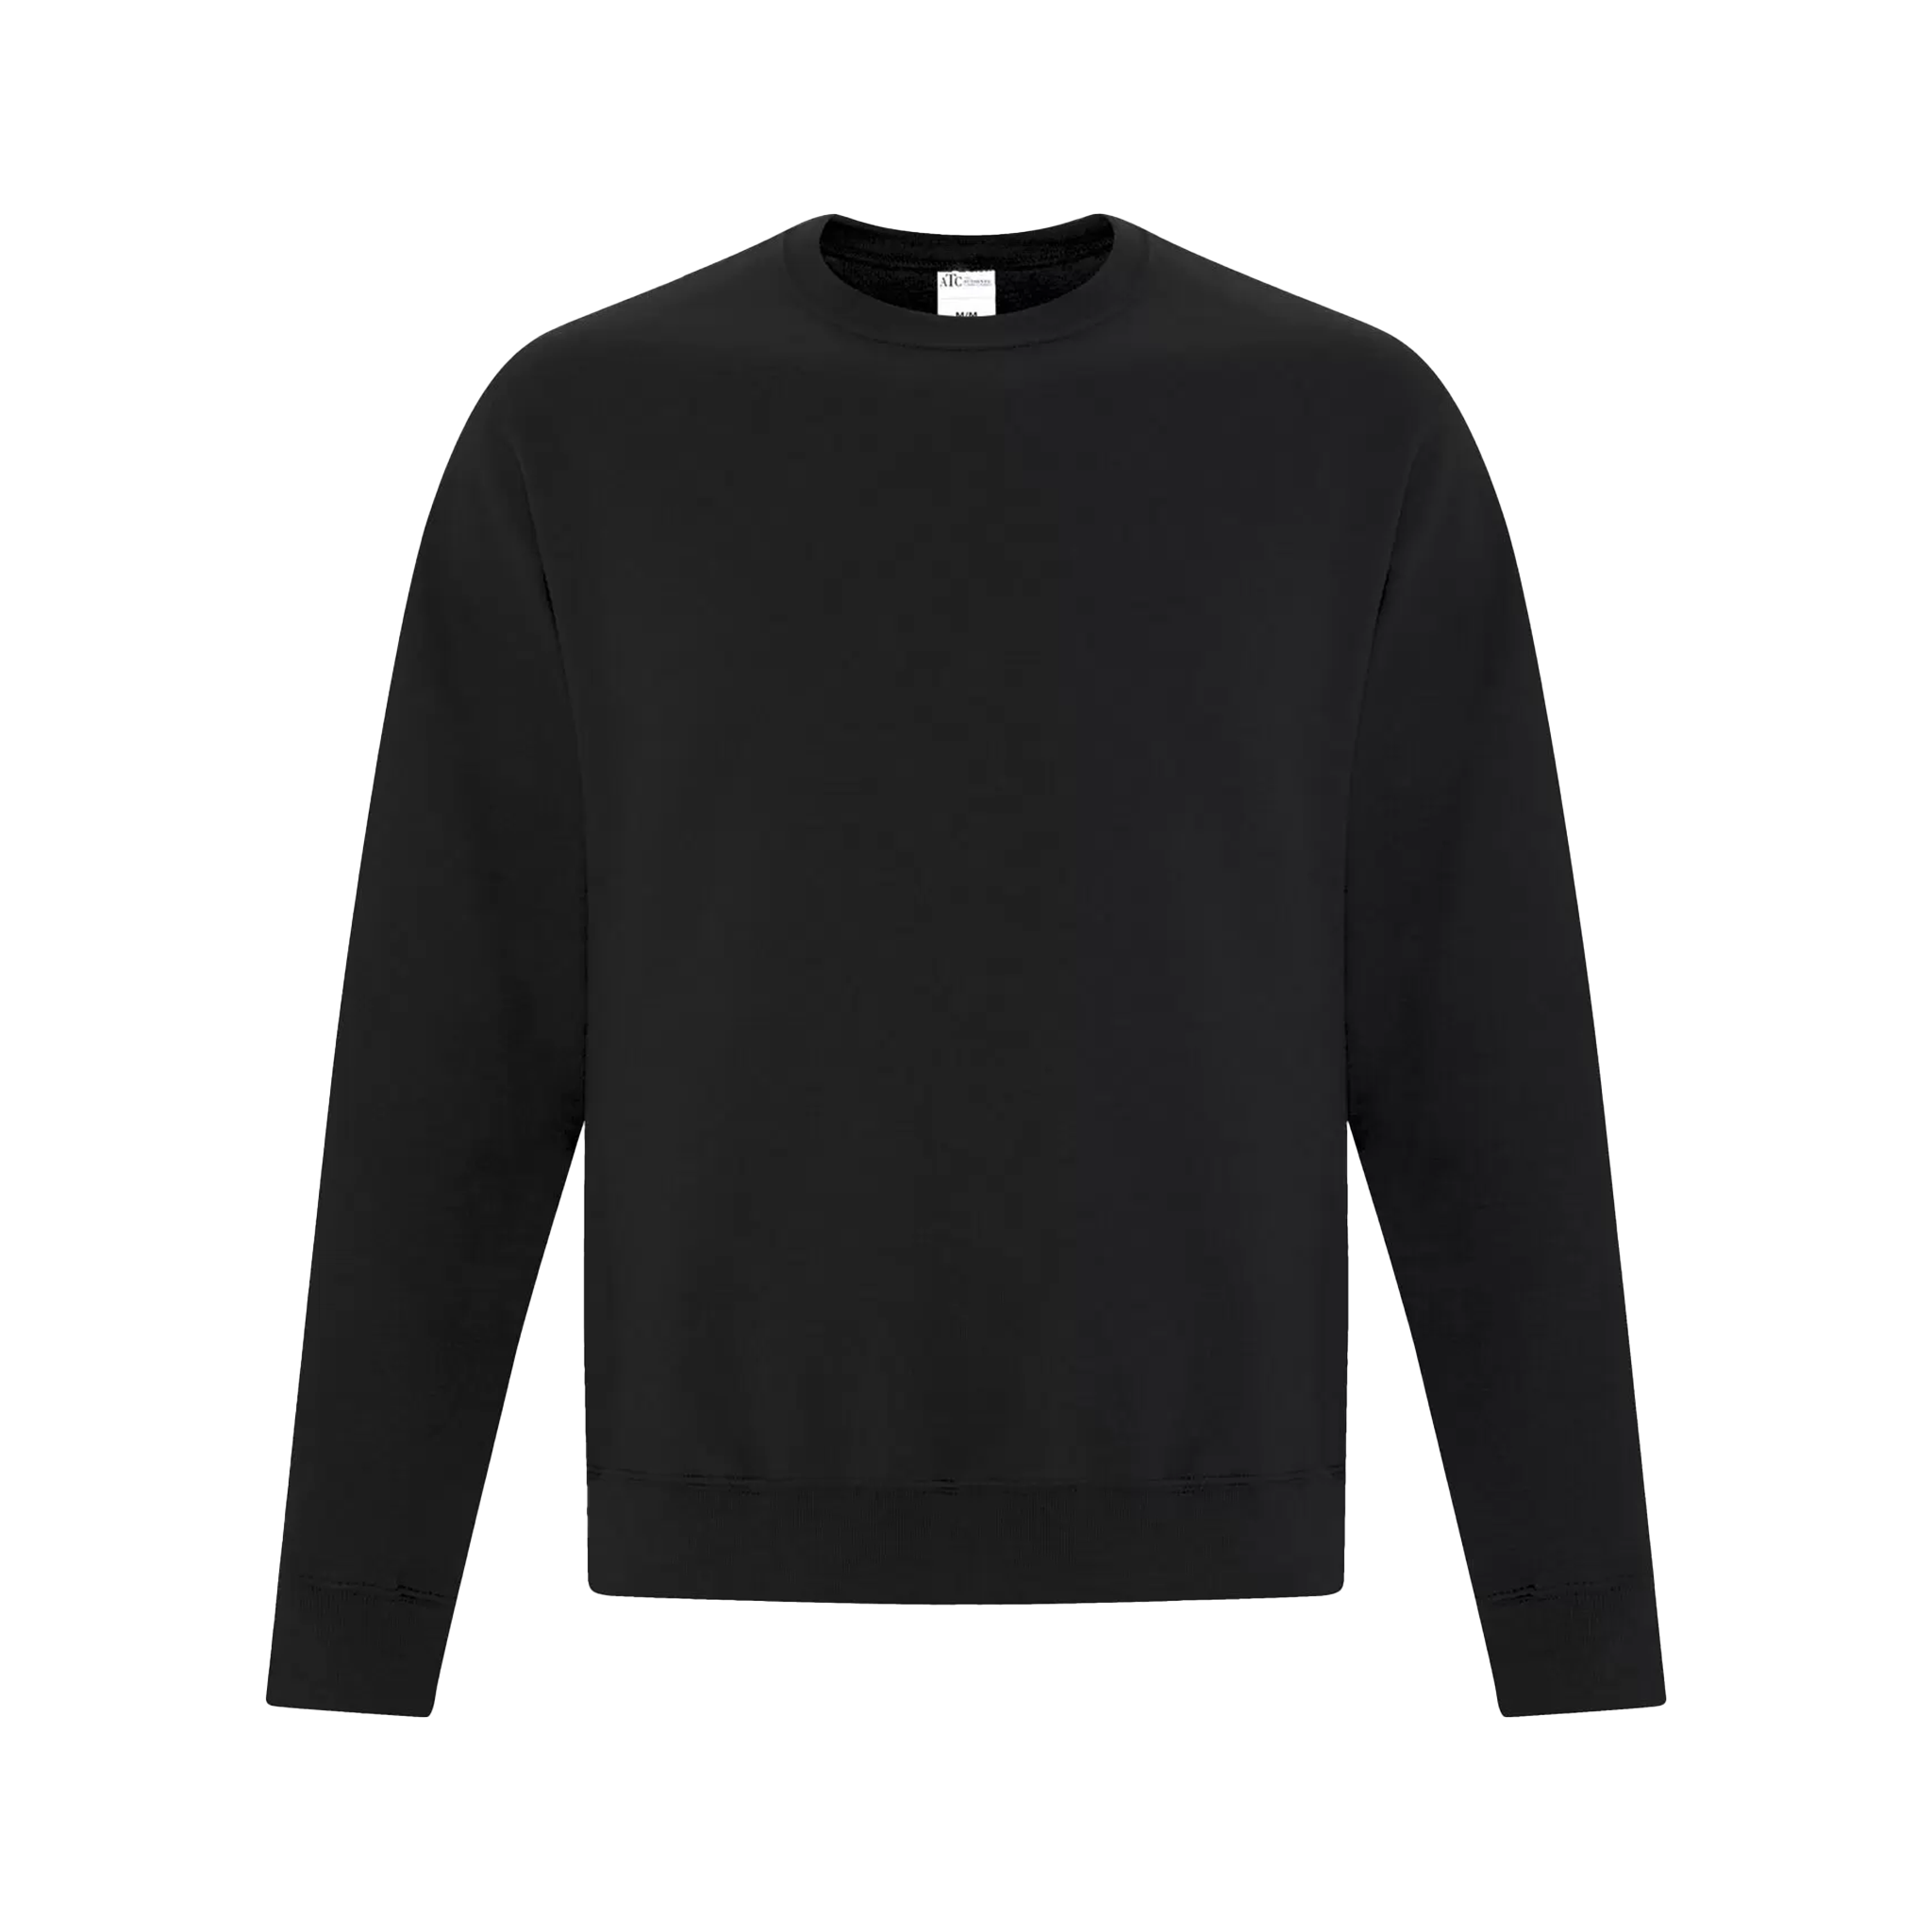 ATC Everyday Fleece Crewneck Sweatshirt - Adult Unisex Sizing S-4XL - Black